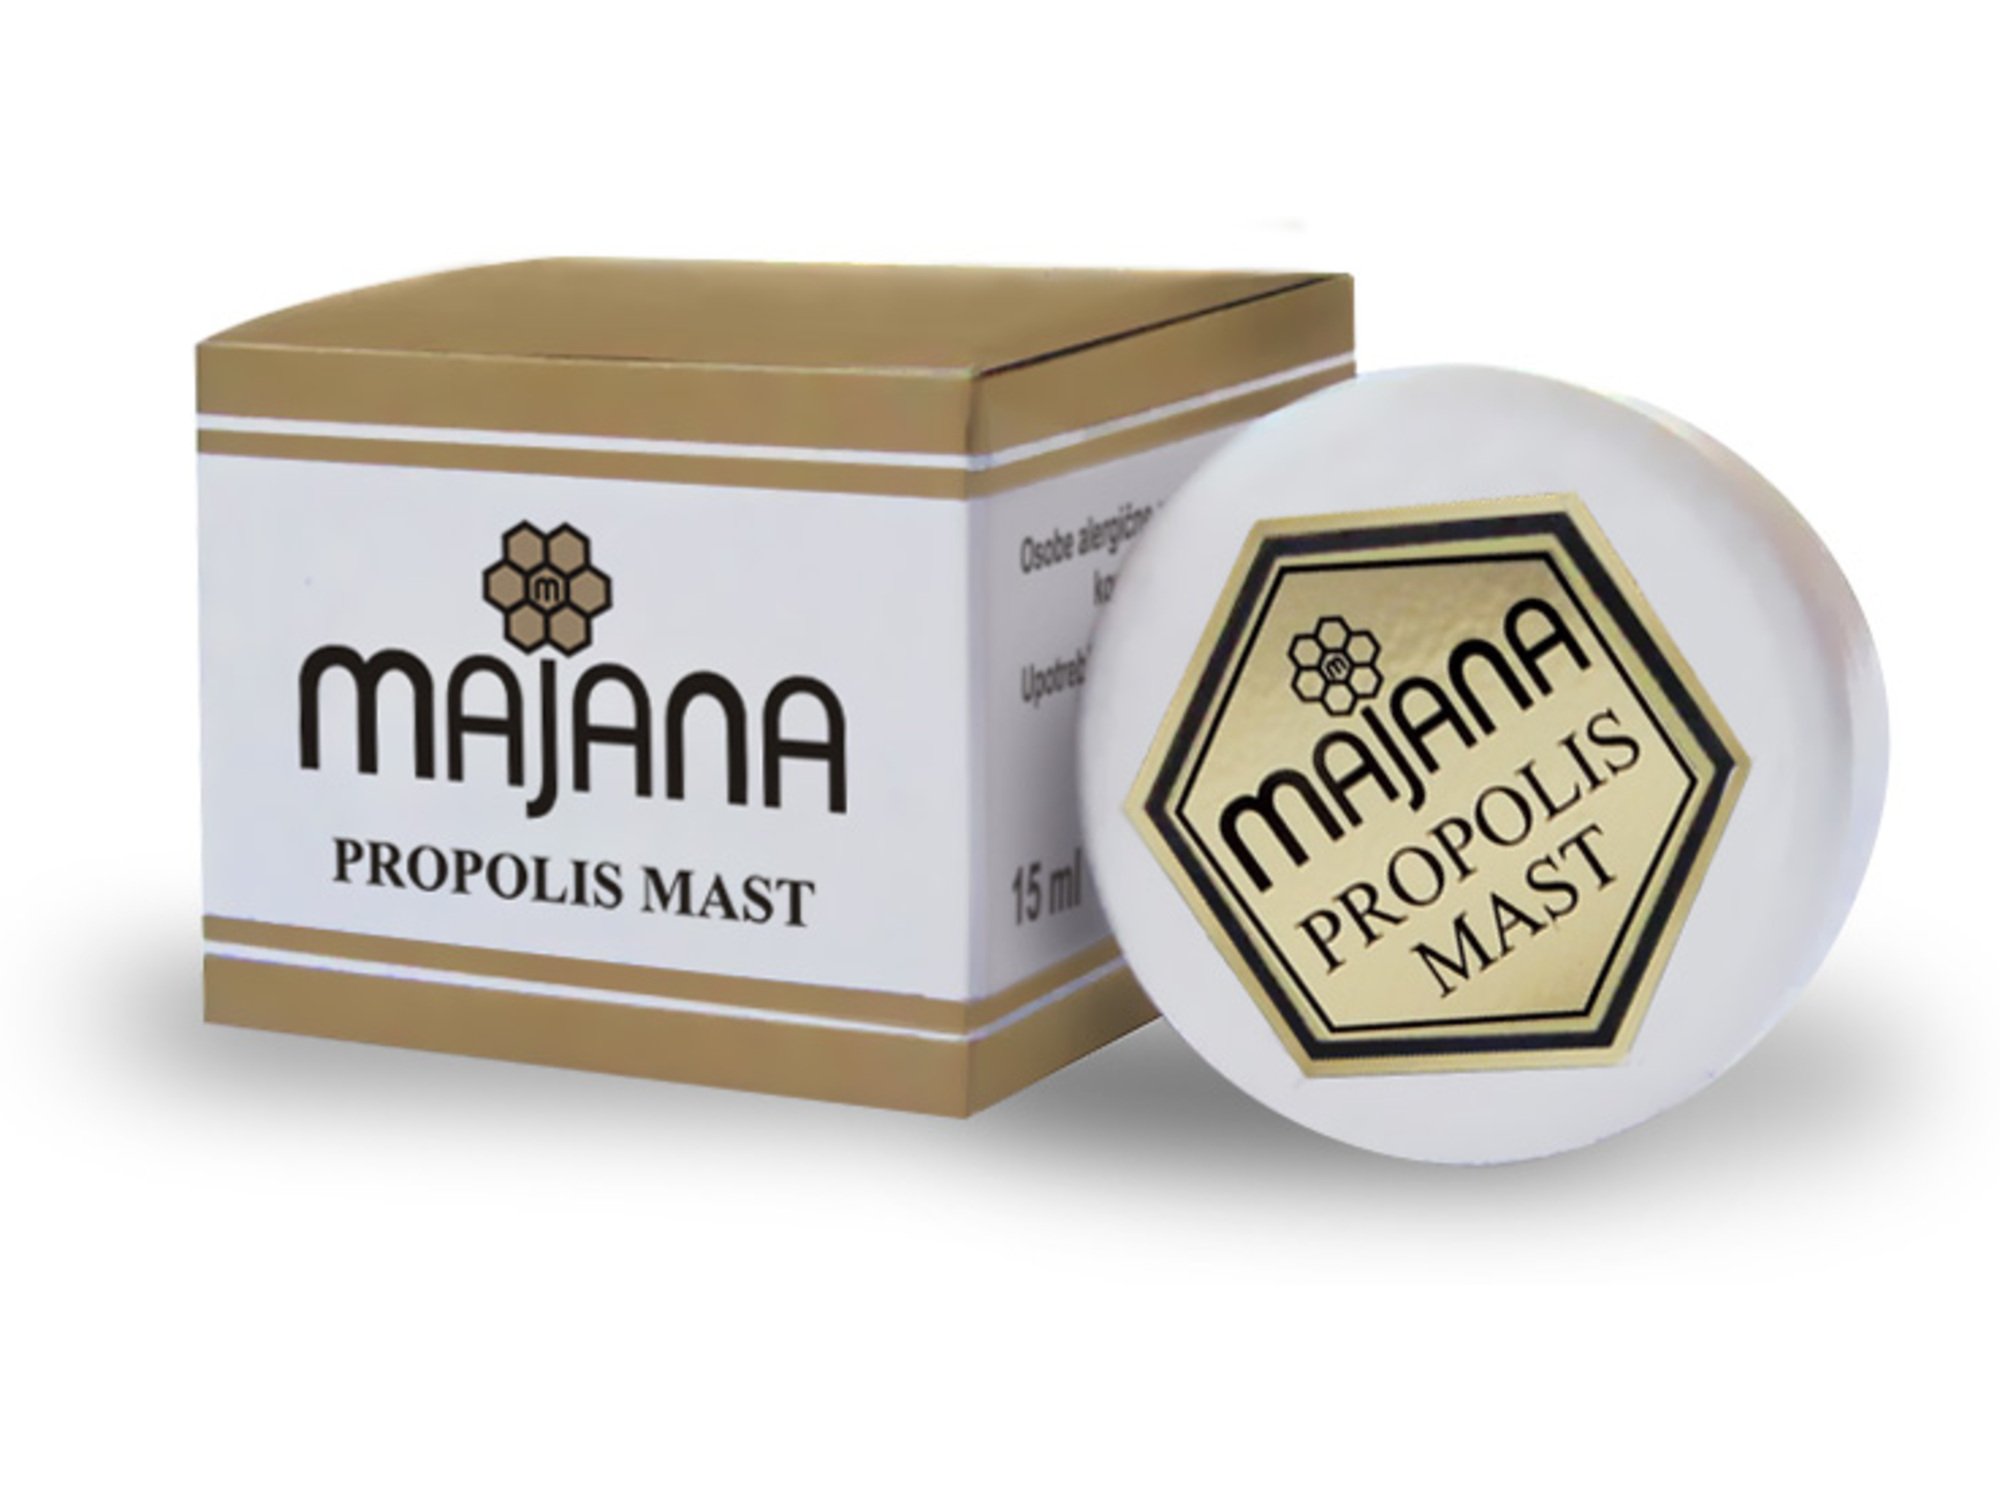 Majana Propolis mast 15ml